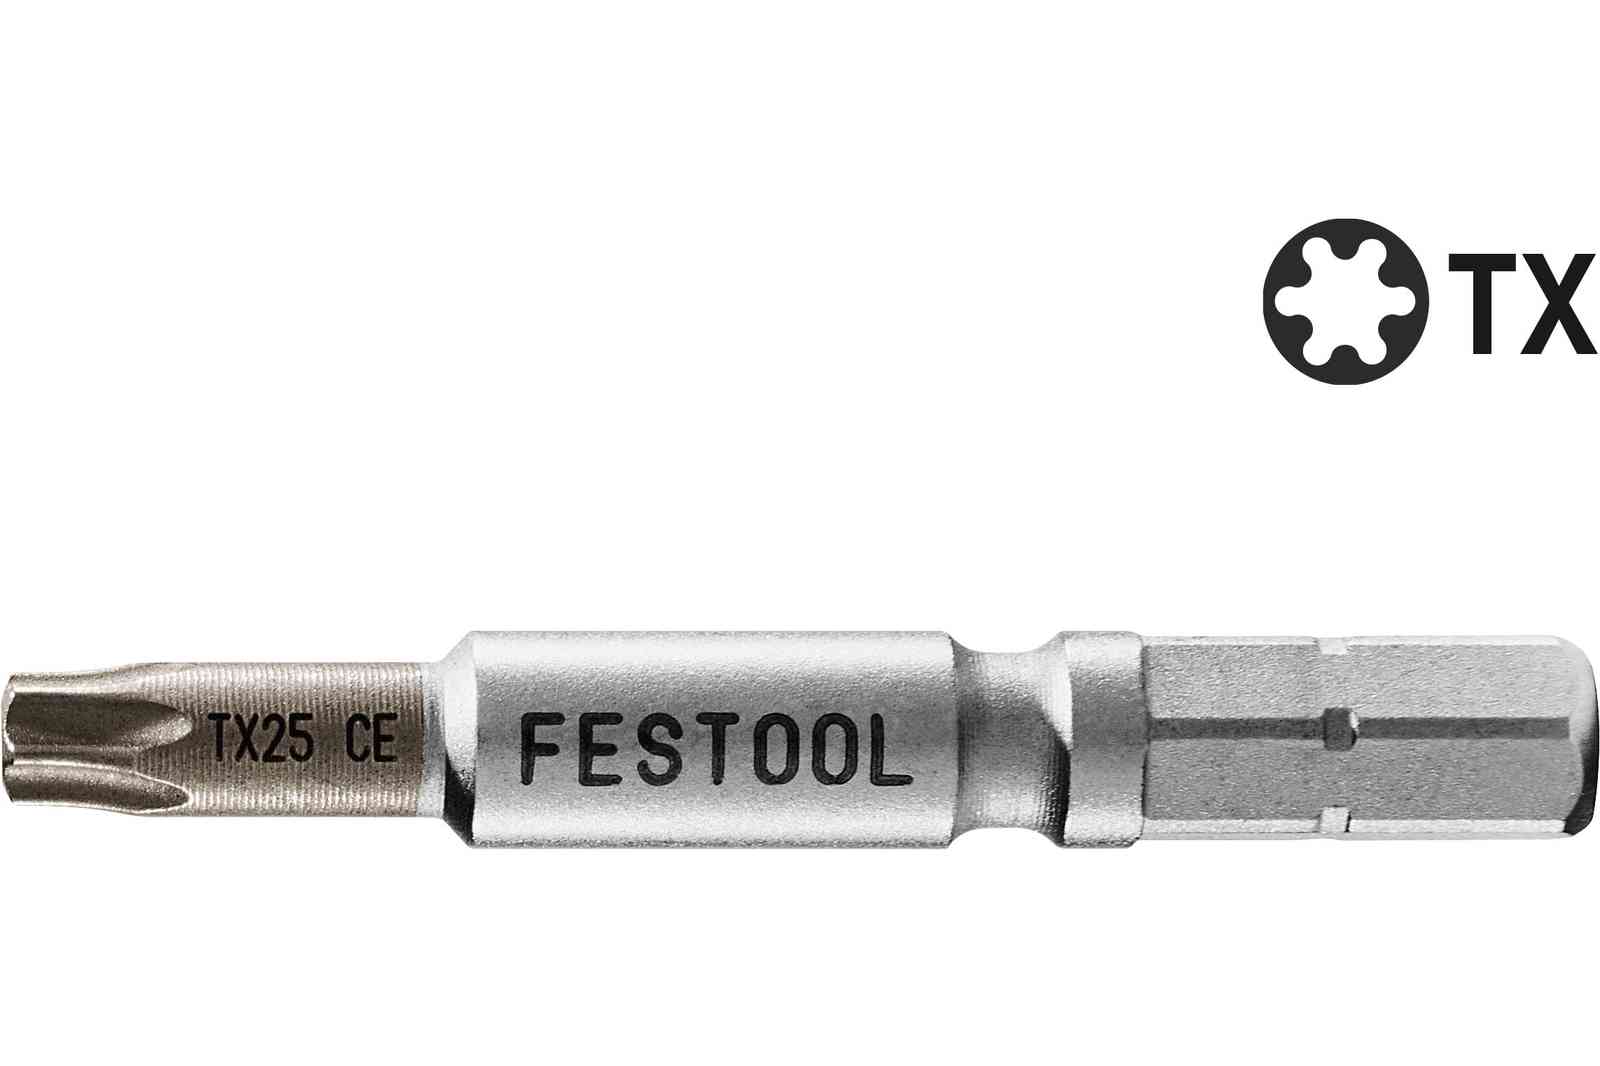 Festool Bits TX TX 25-50 CENTRO/2